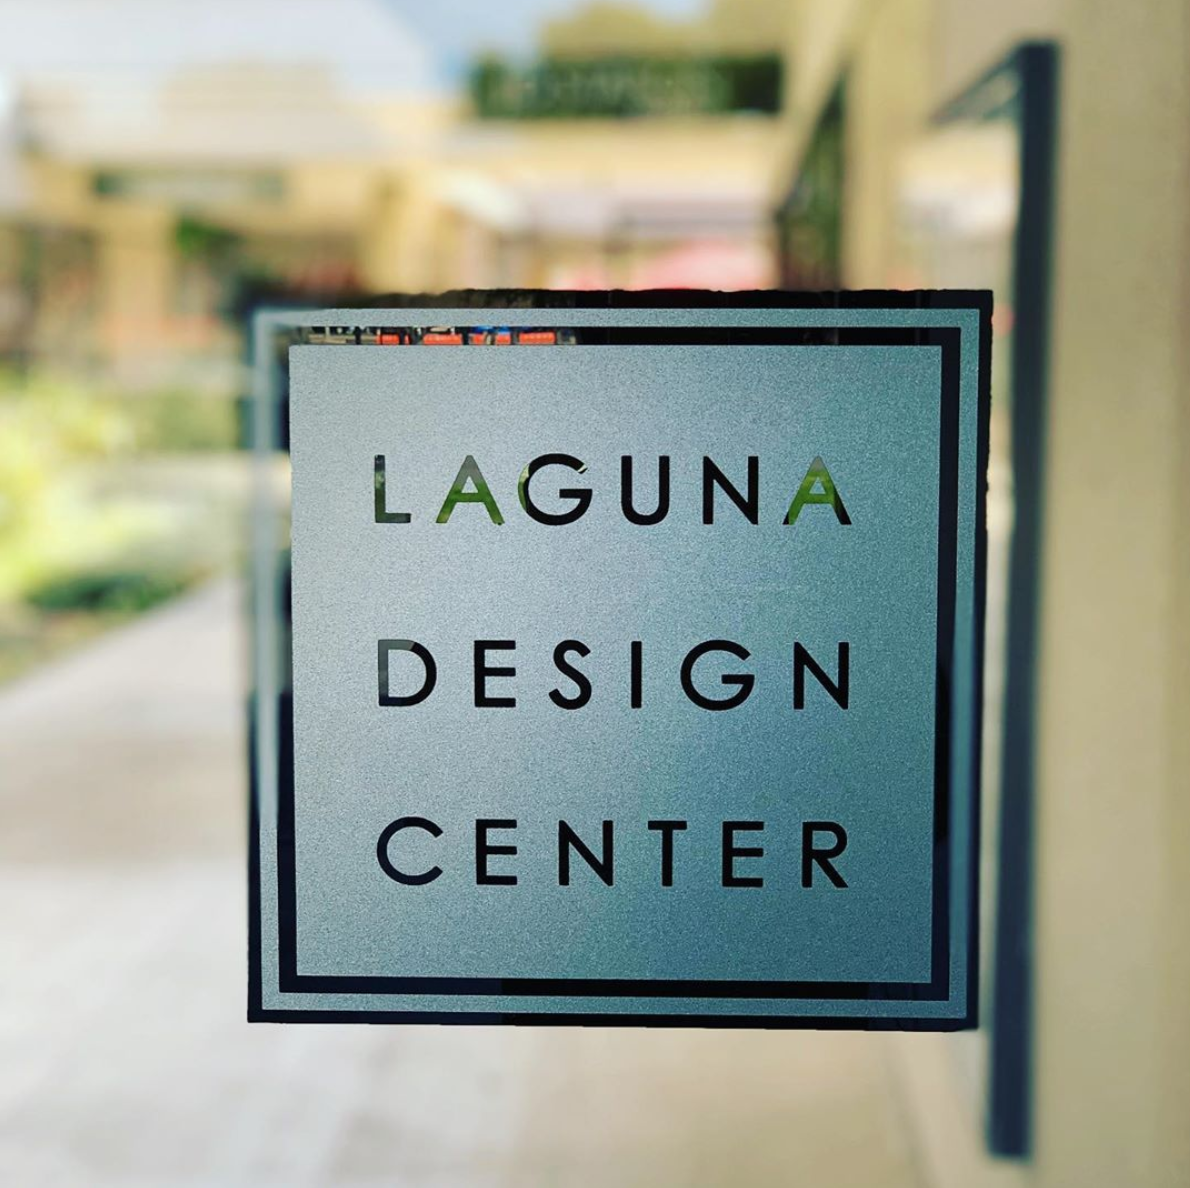 Laguna Design Center is Now Open! - News from Laguna Design Center